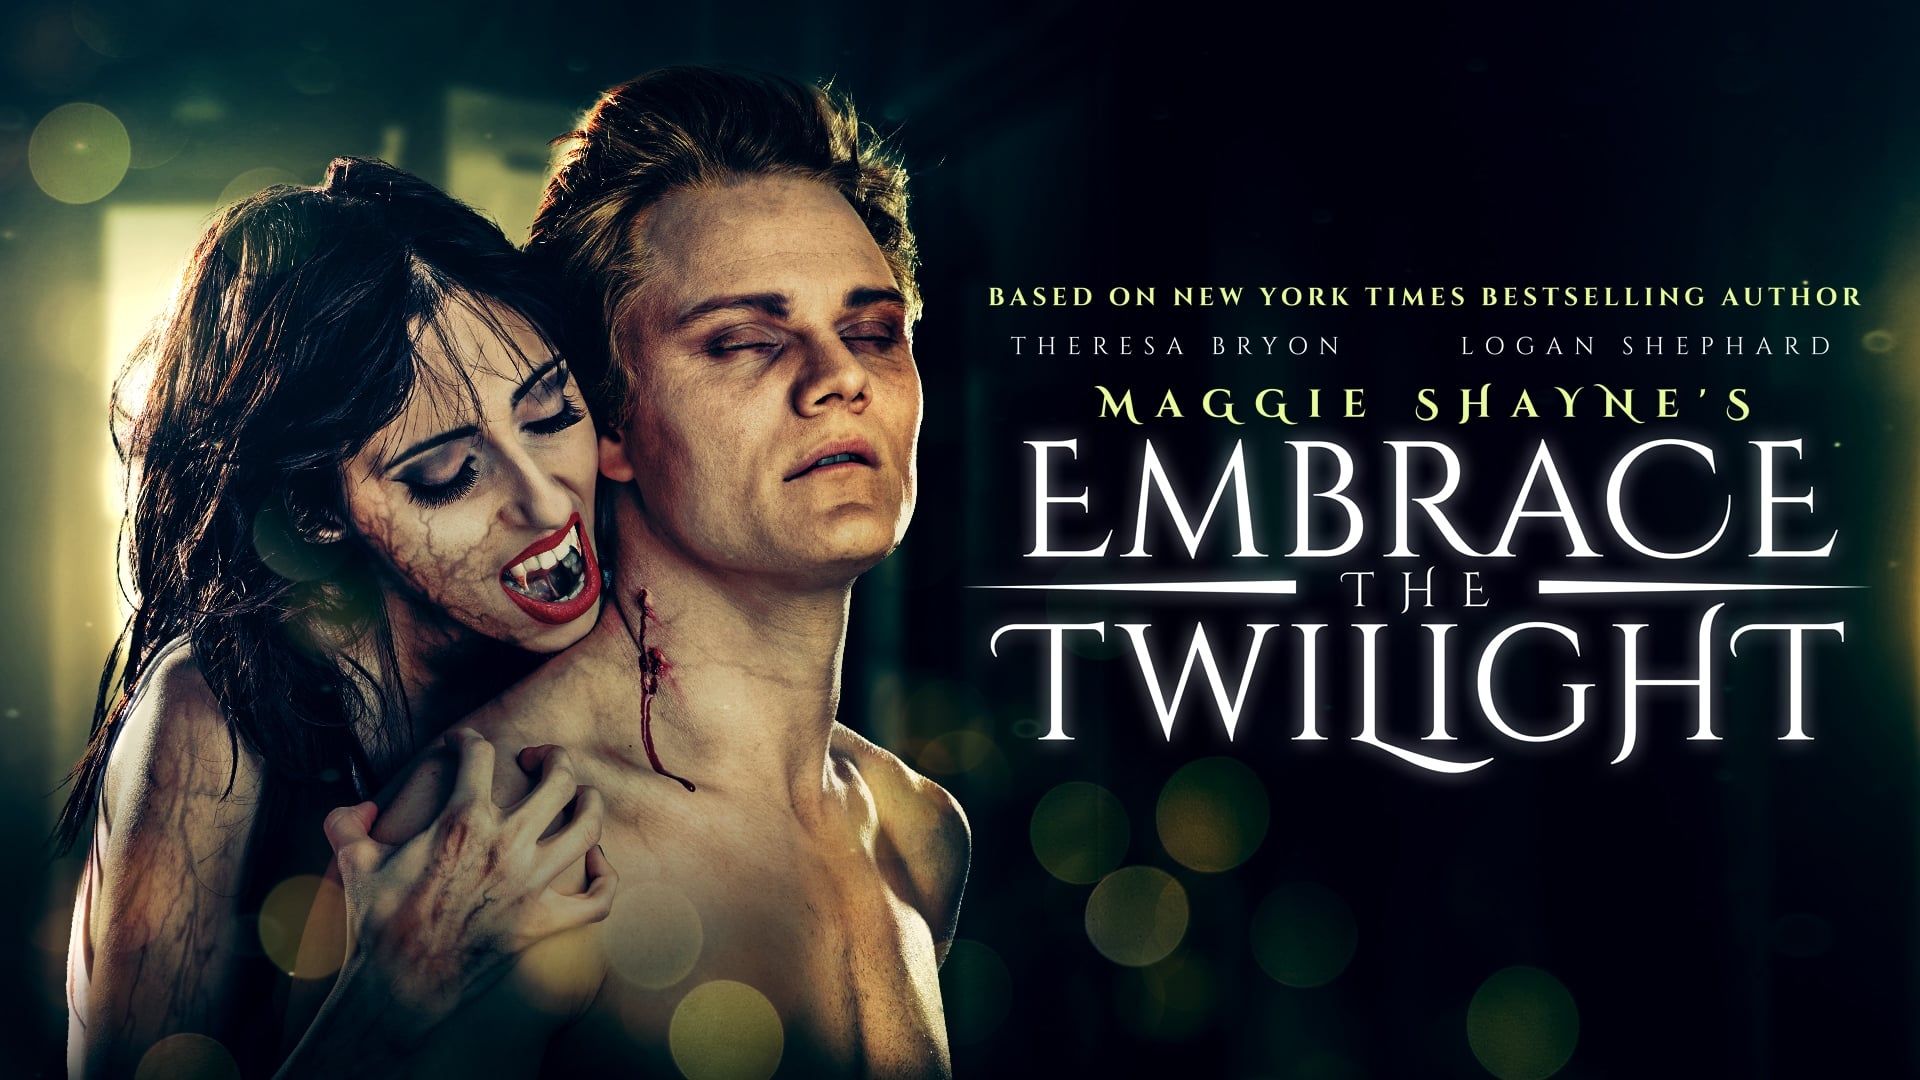 Maggie Shayne's Embrace the Twilight background